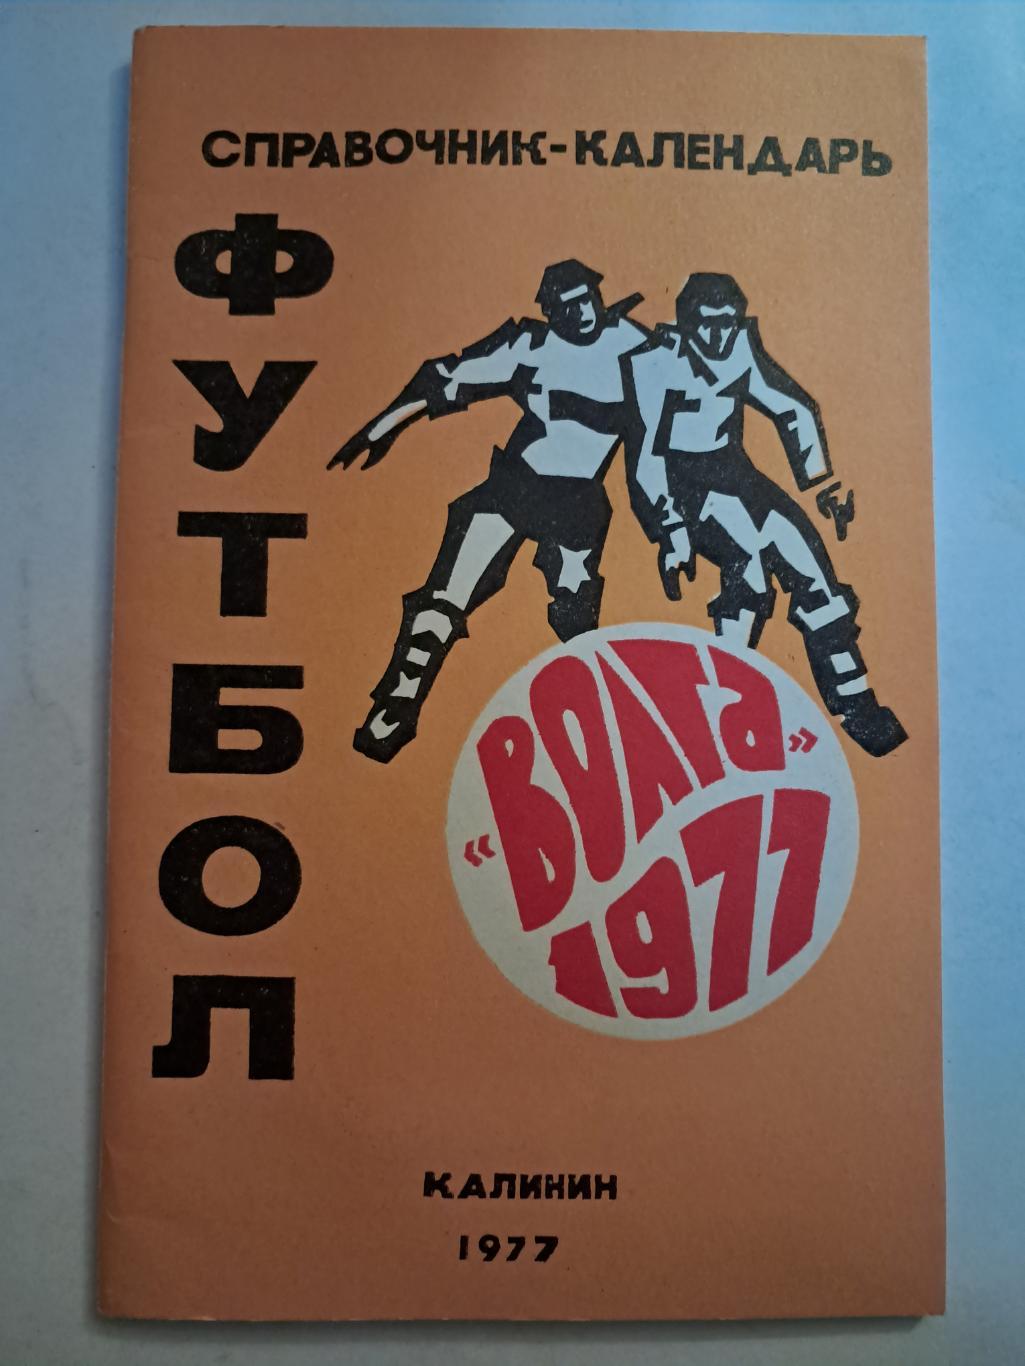 Календарь-справочник по футболу 1977 Калинин